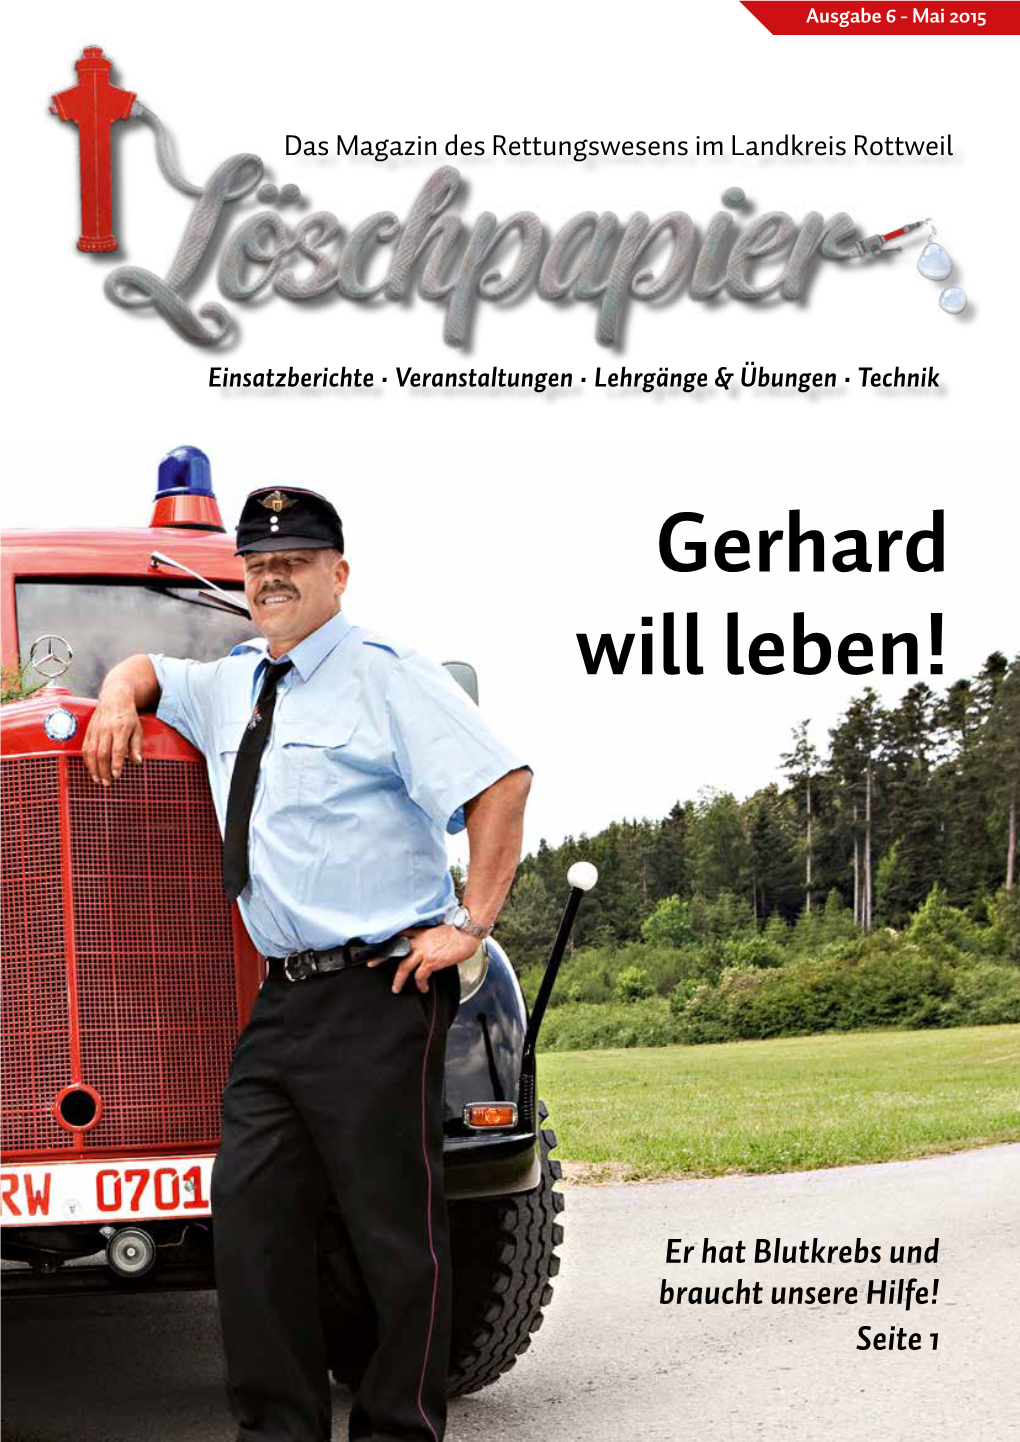 Gerhard Will Leben!